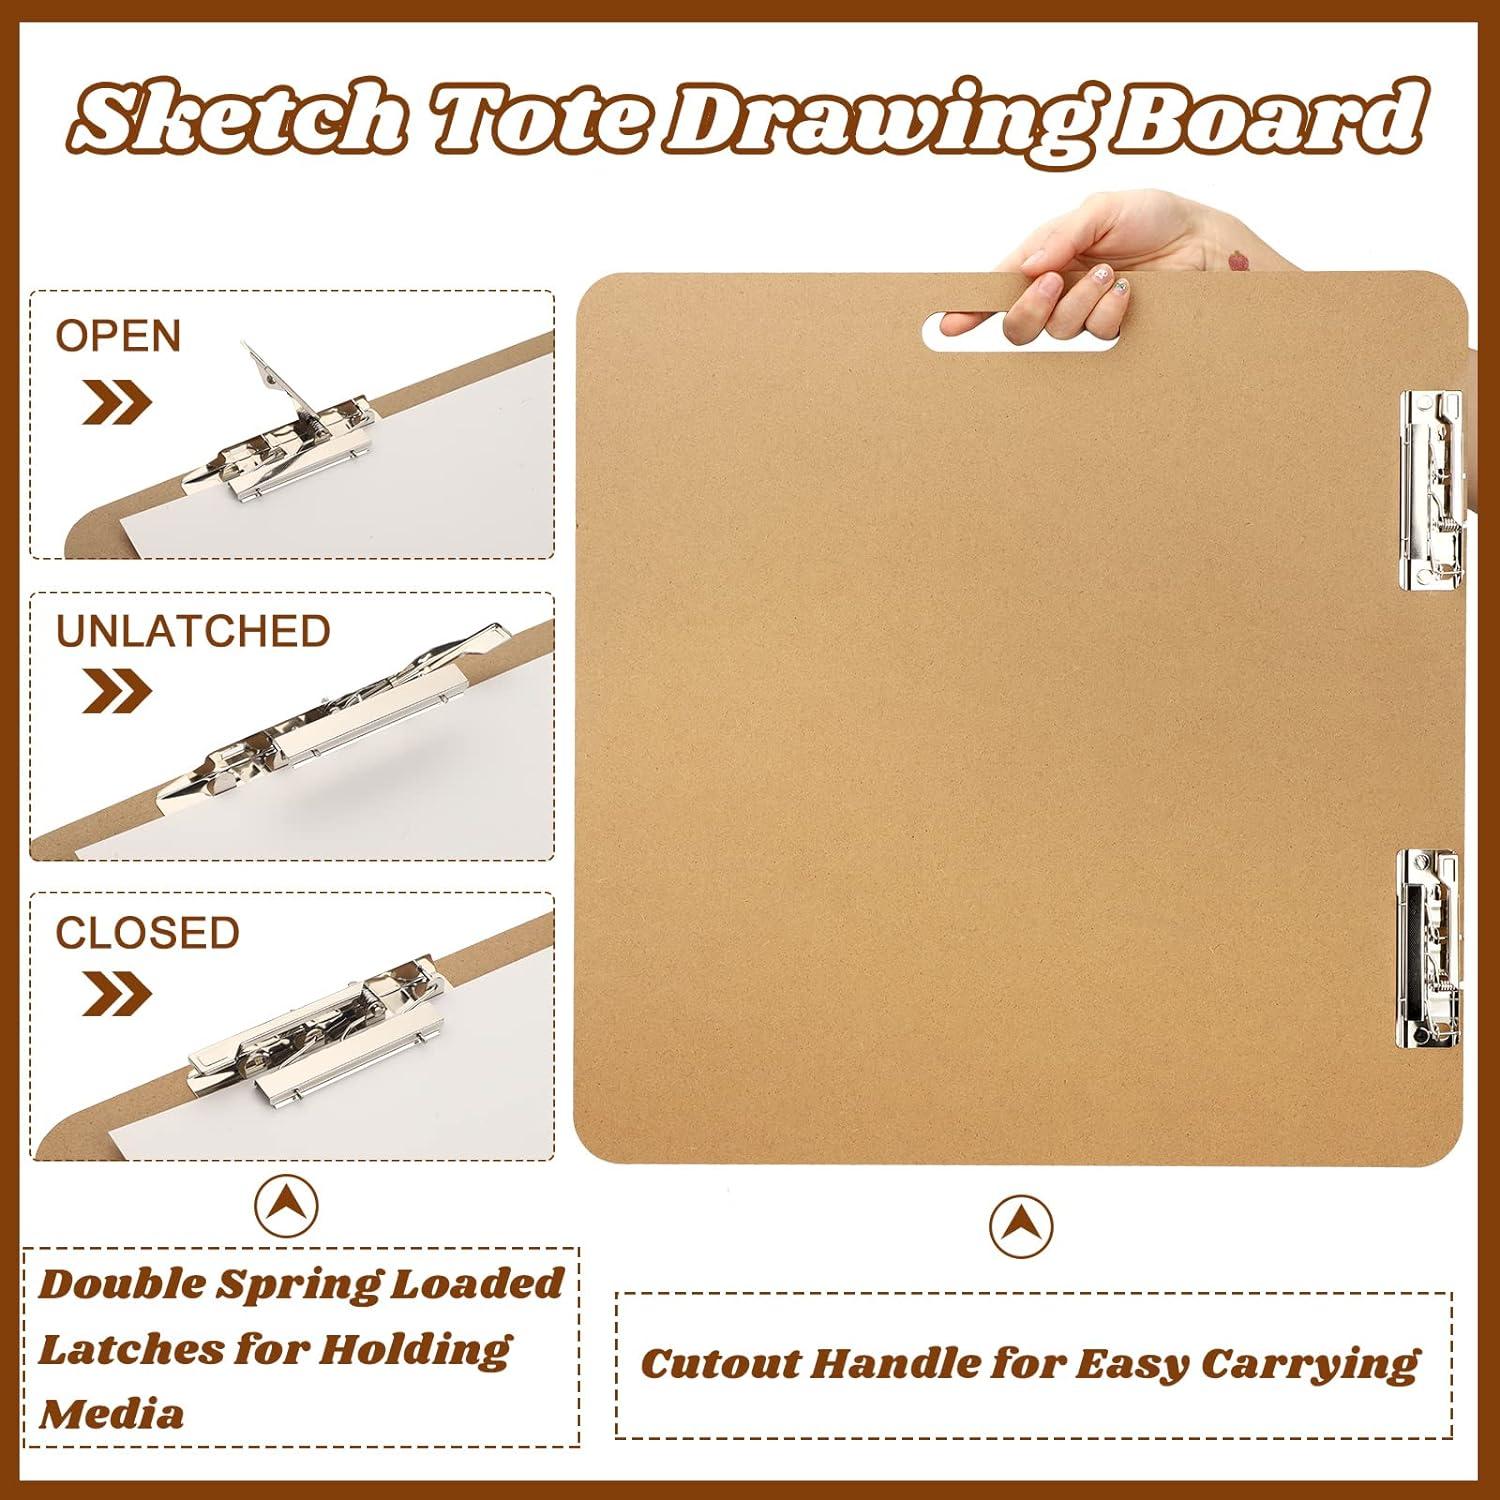 2 Pack 18 x 18 Inch Artist Sketch Tote Board MDF Drawing Board